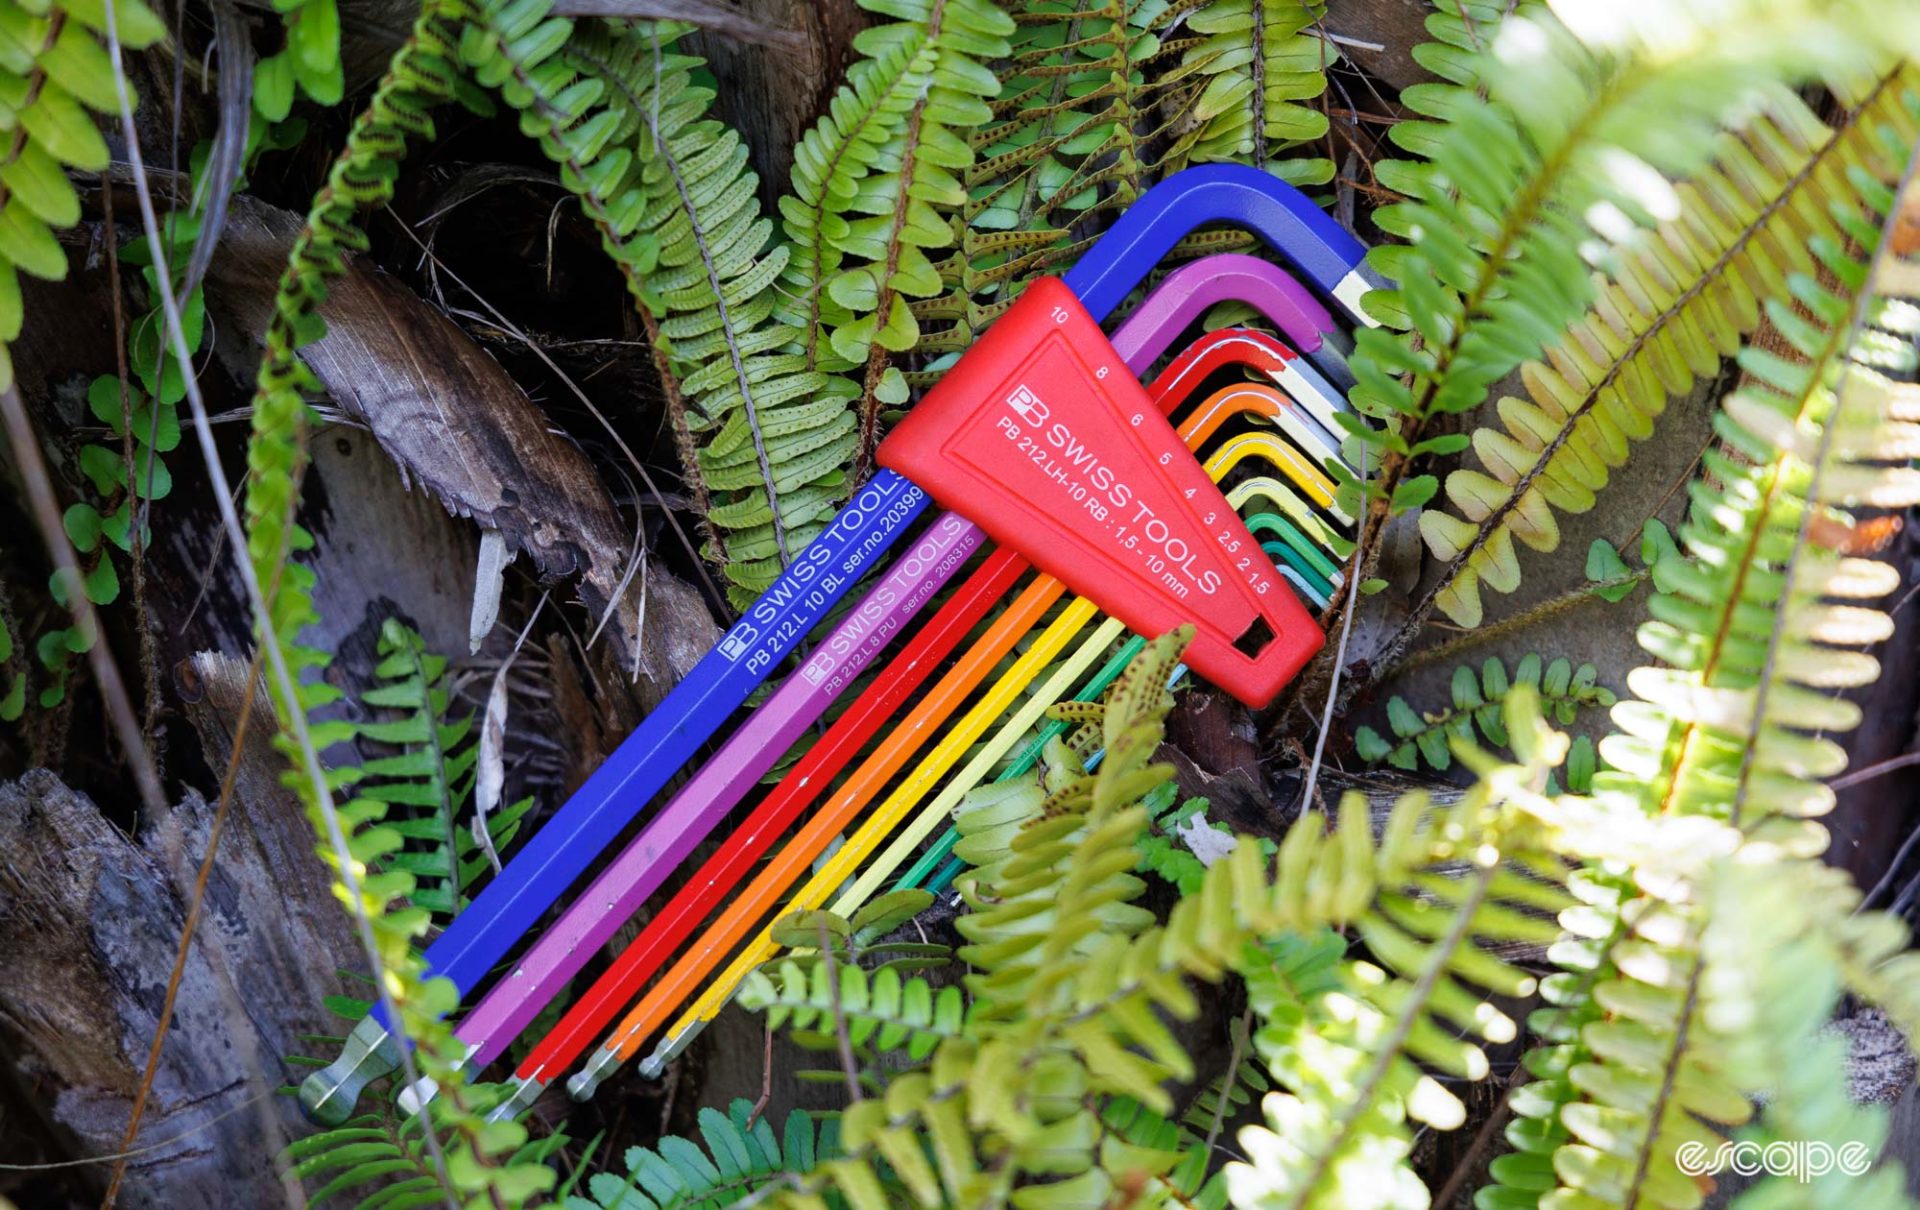 PB Swiss rainbow hex keys placed within green ferns. 